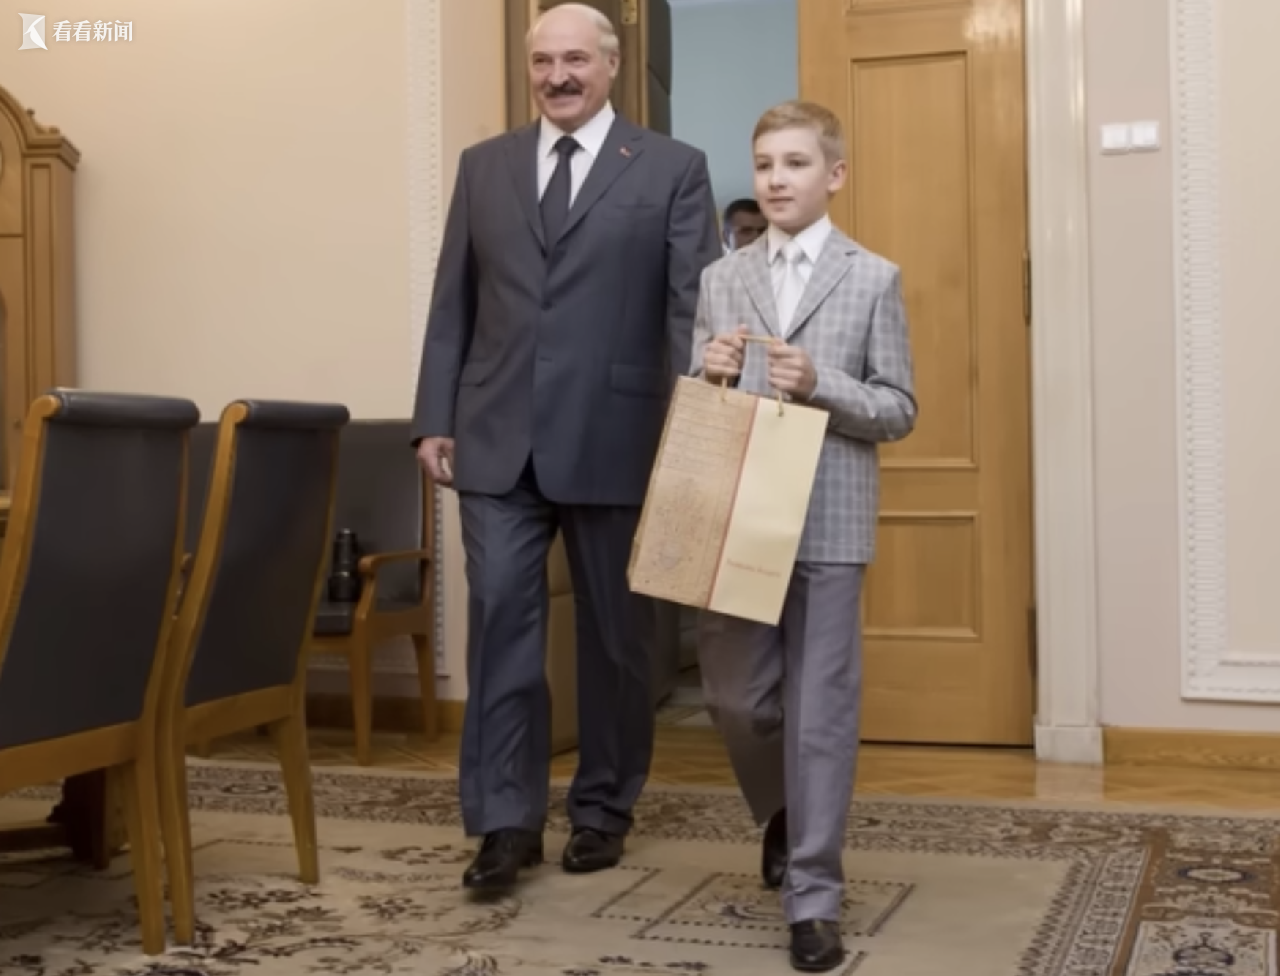 Младший сын Александра Лукашеноко дал интервью